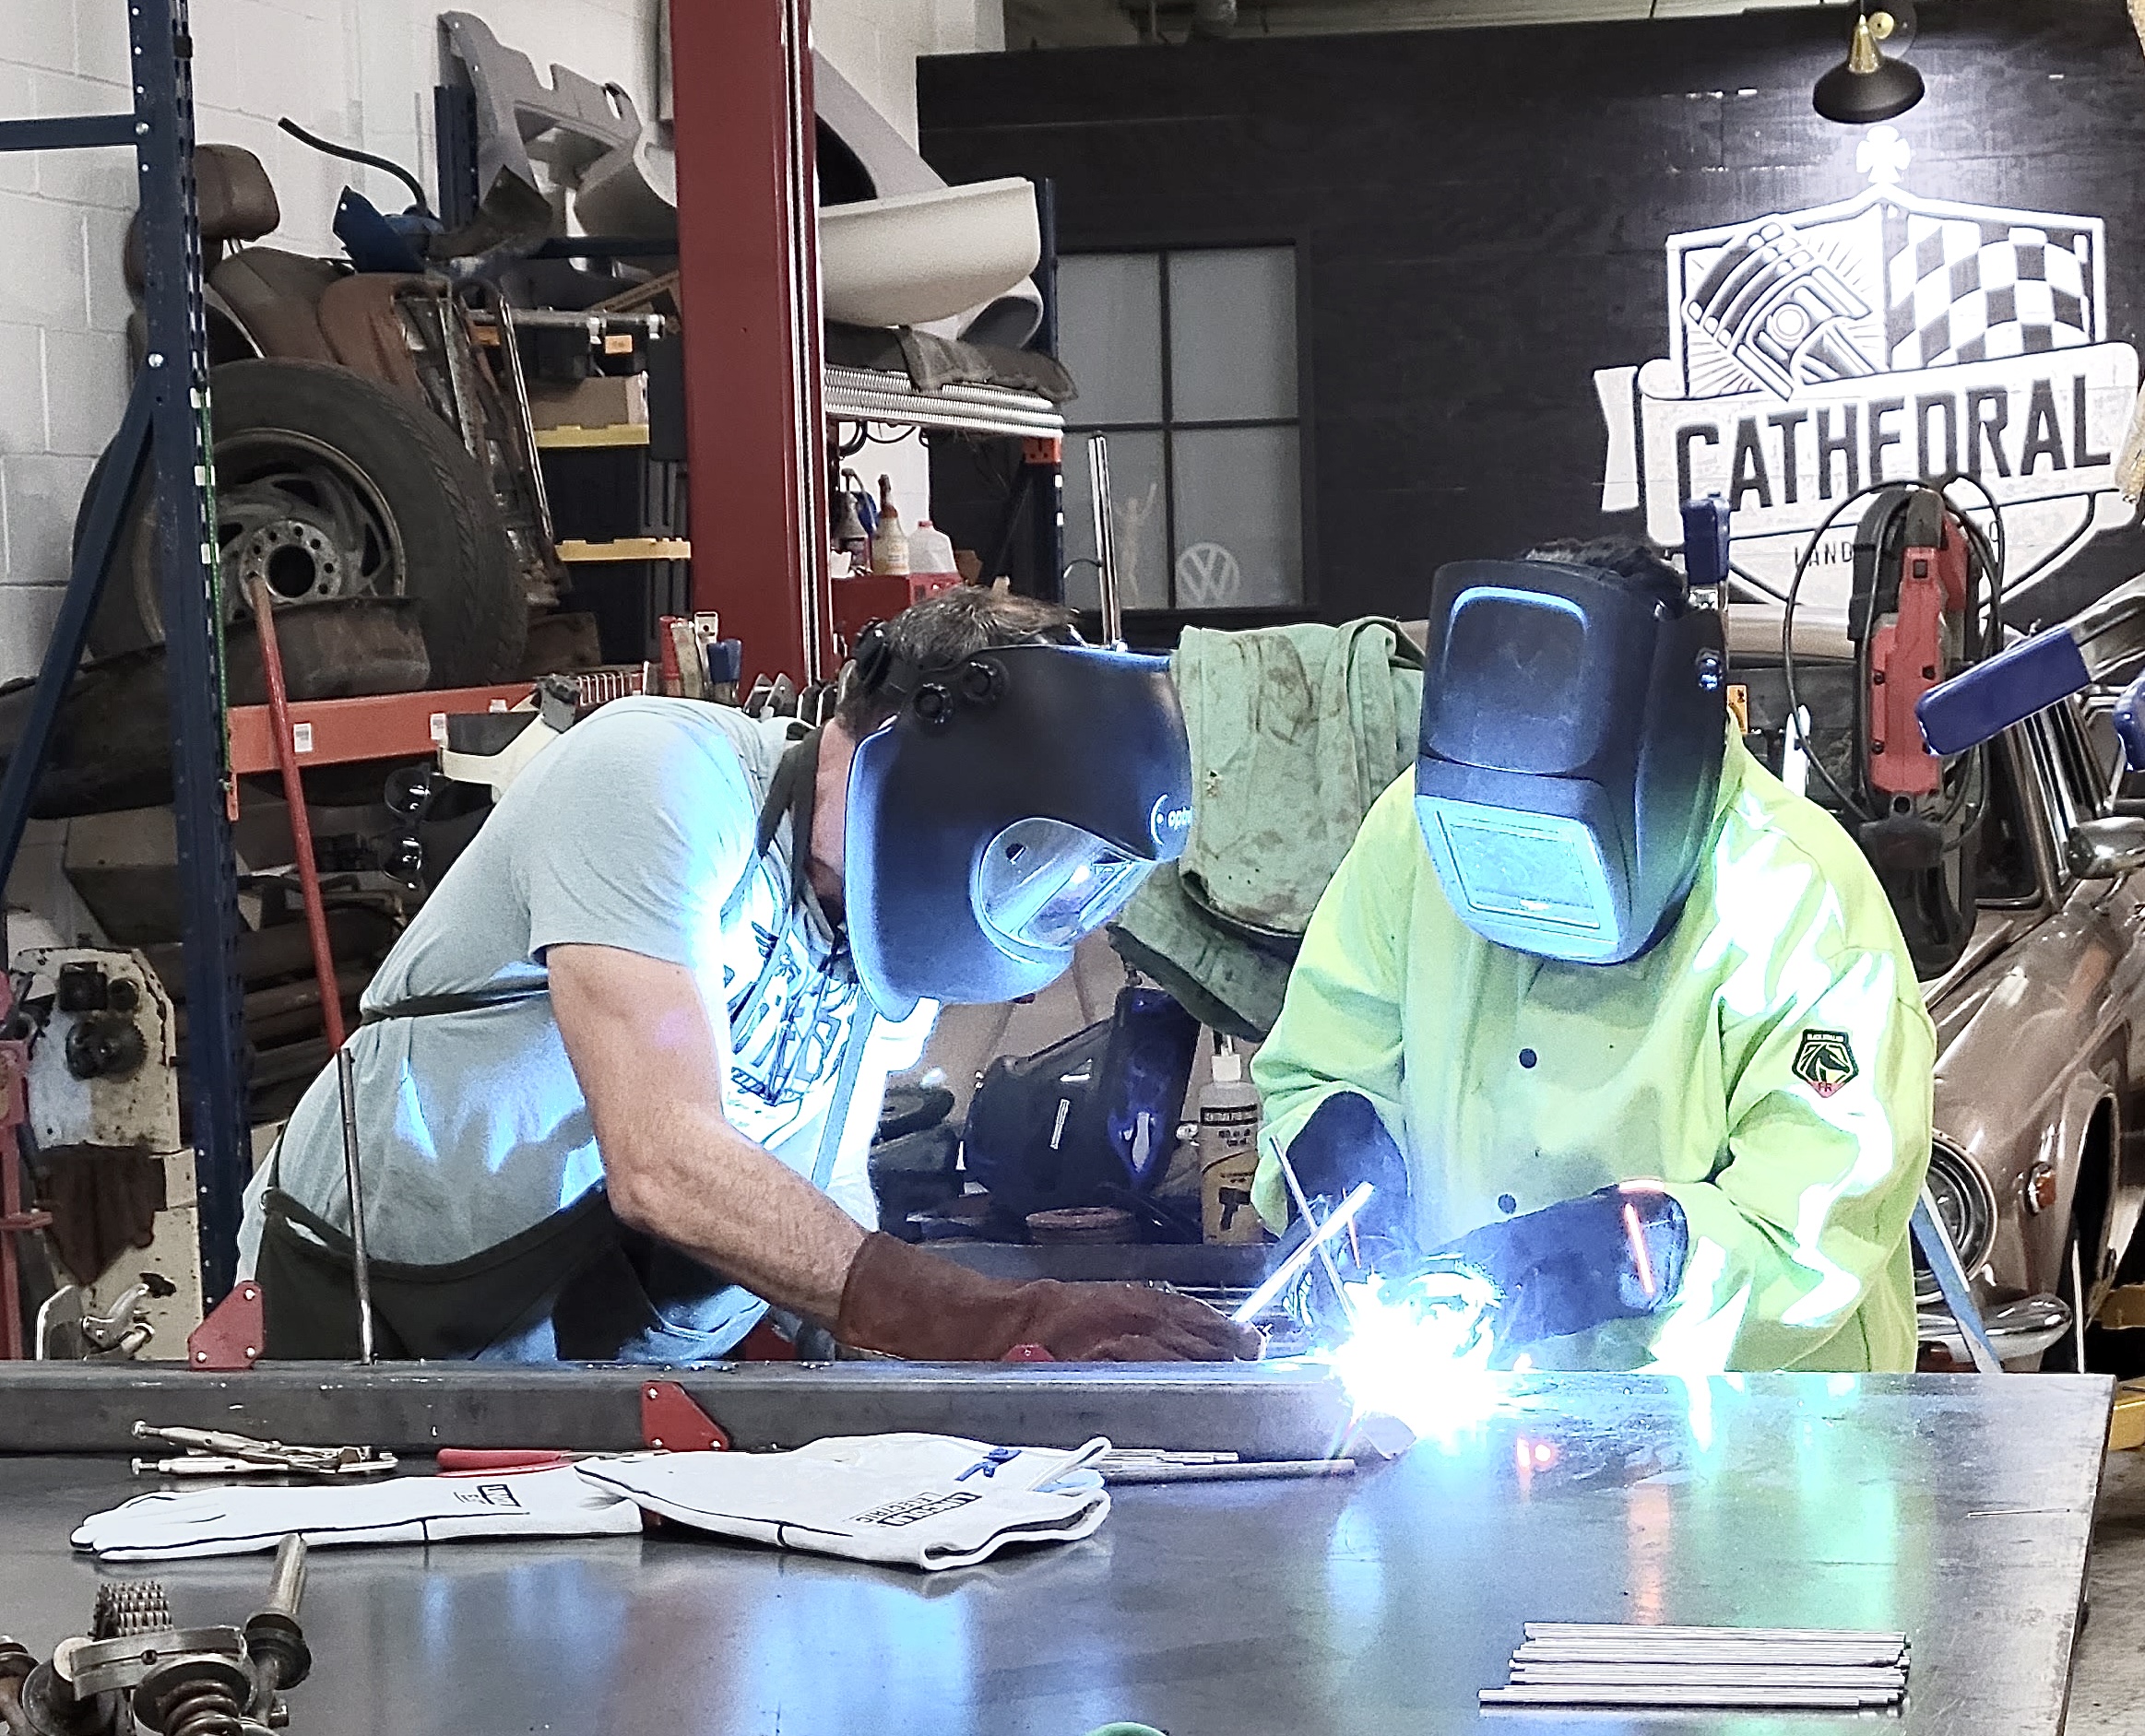 Welding - Columbus Based Non-Profit Teaches Next Generation Automotive Skills 